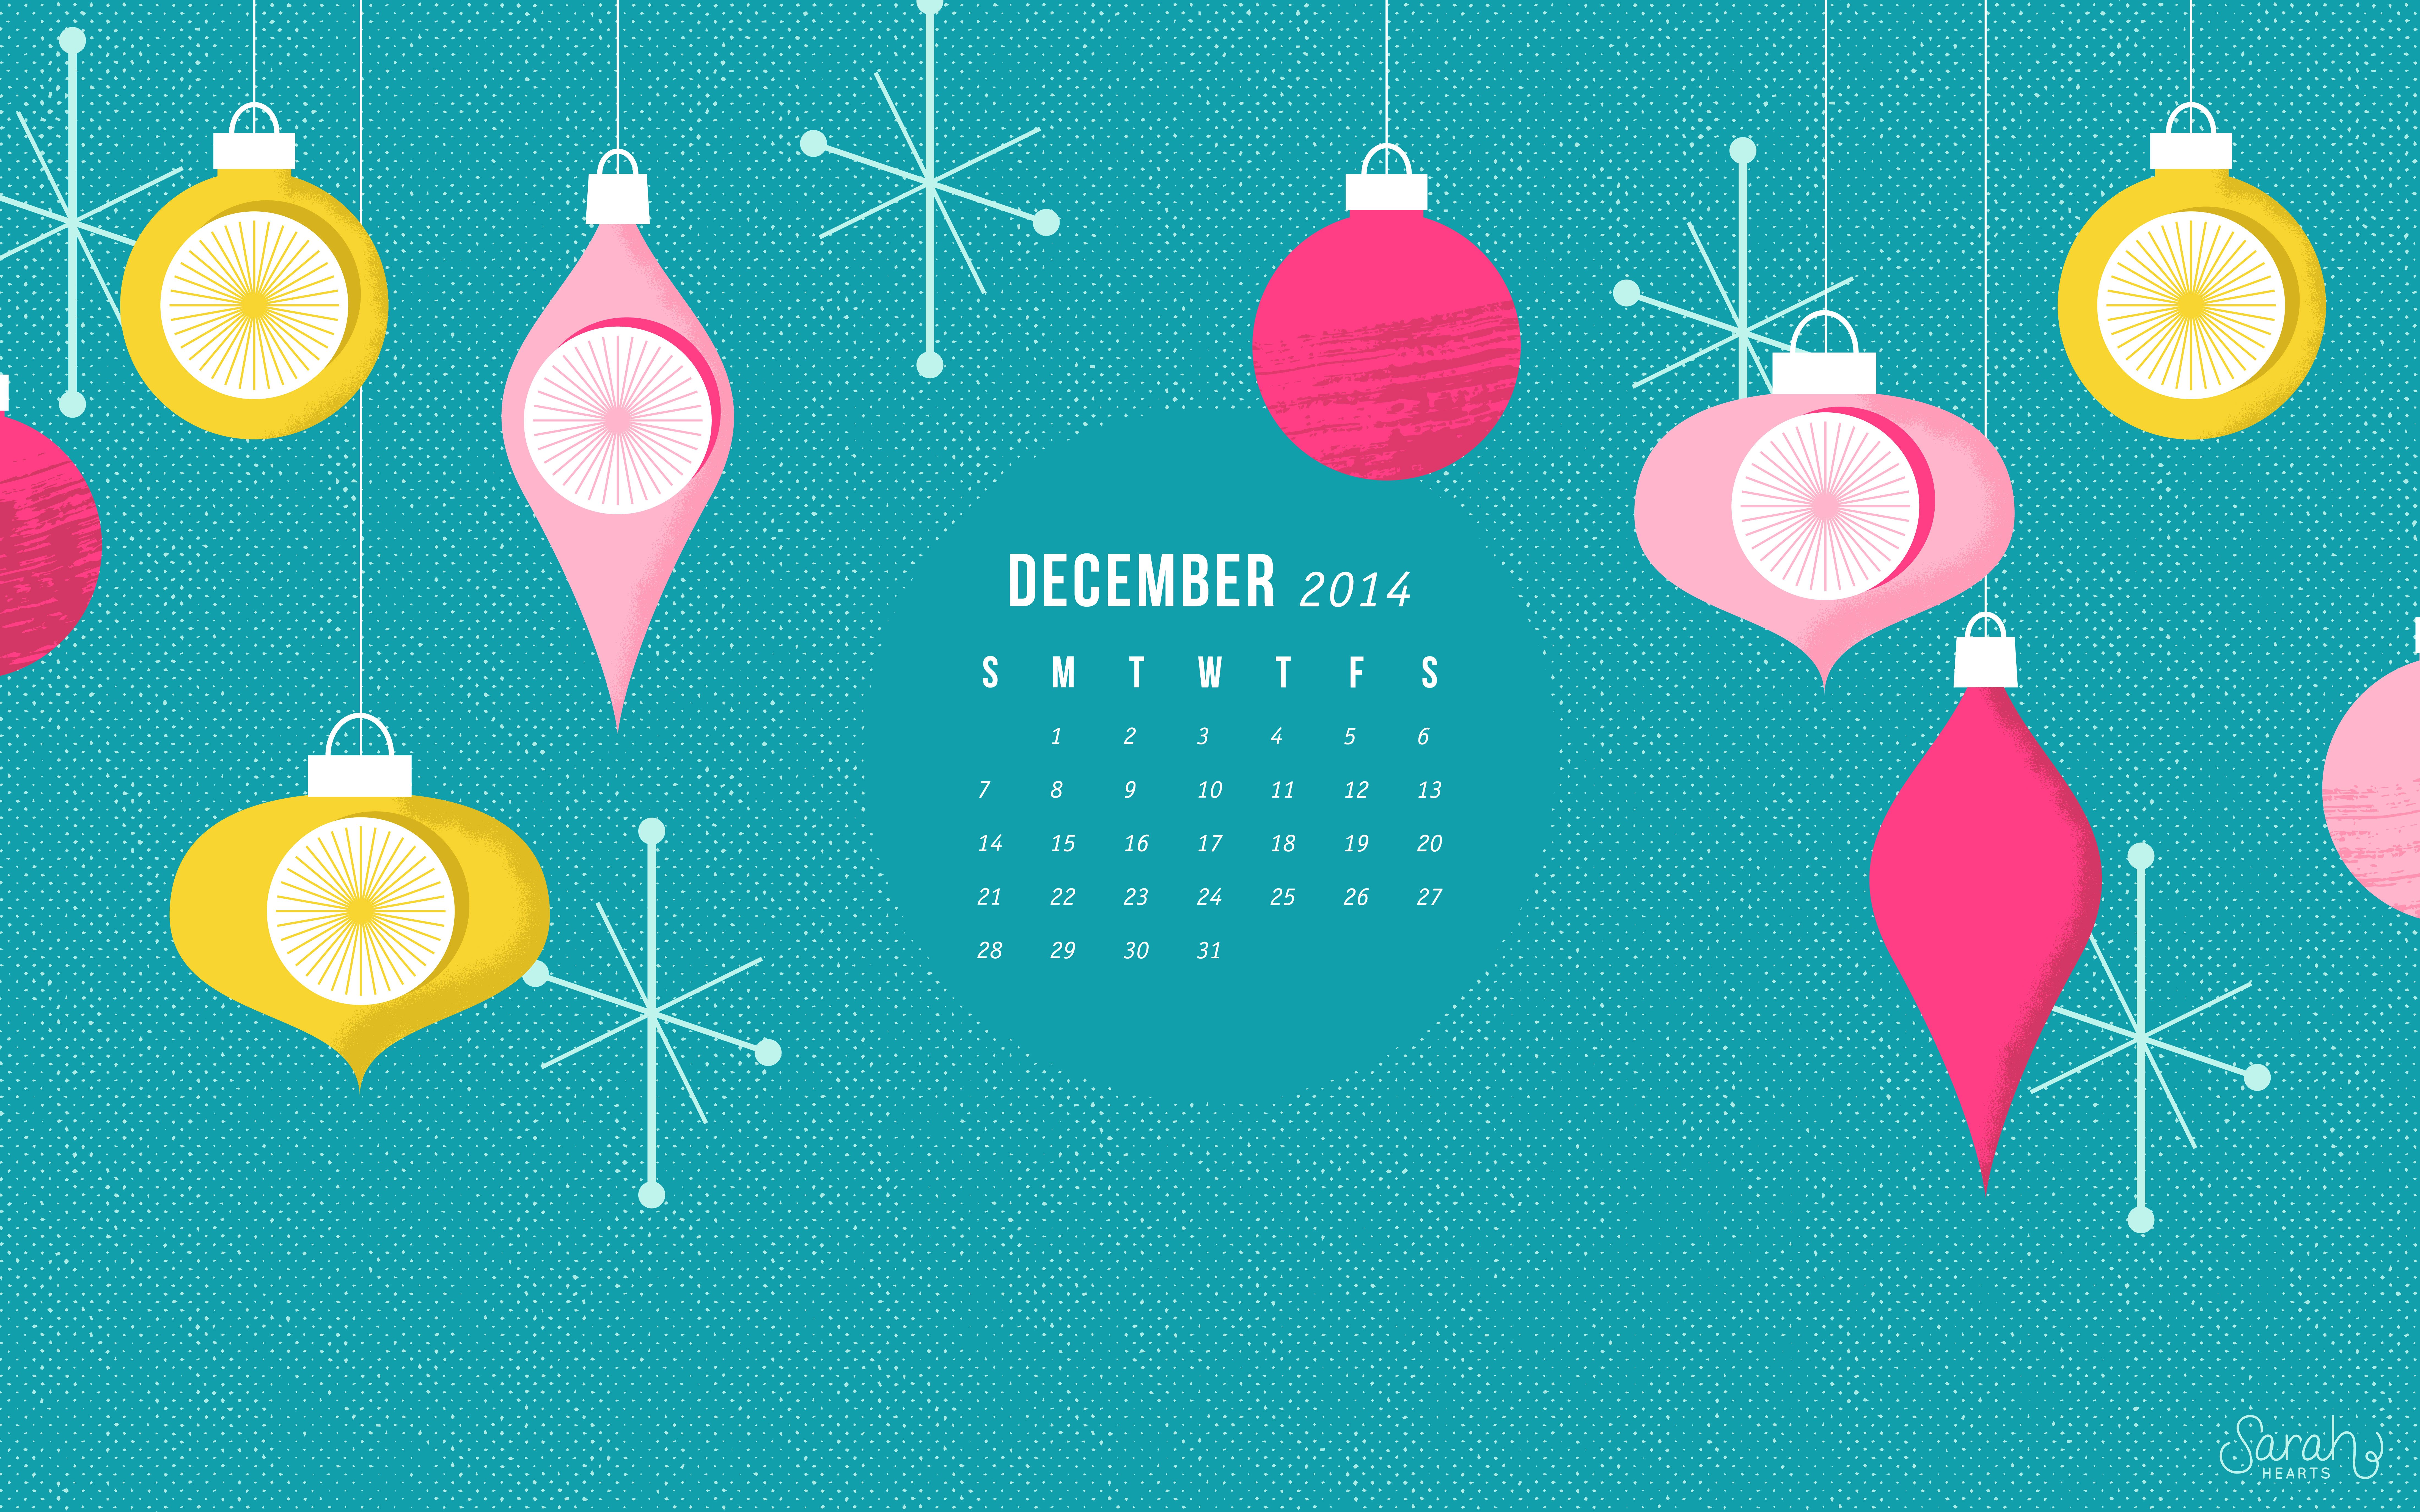 December 2014 Calendar Wallpaper - Sarah Hearts